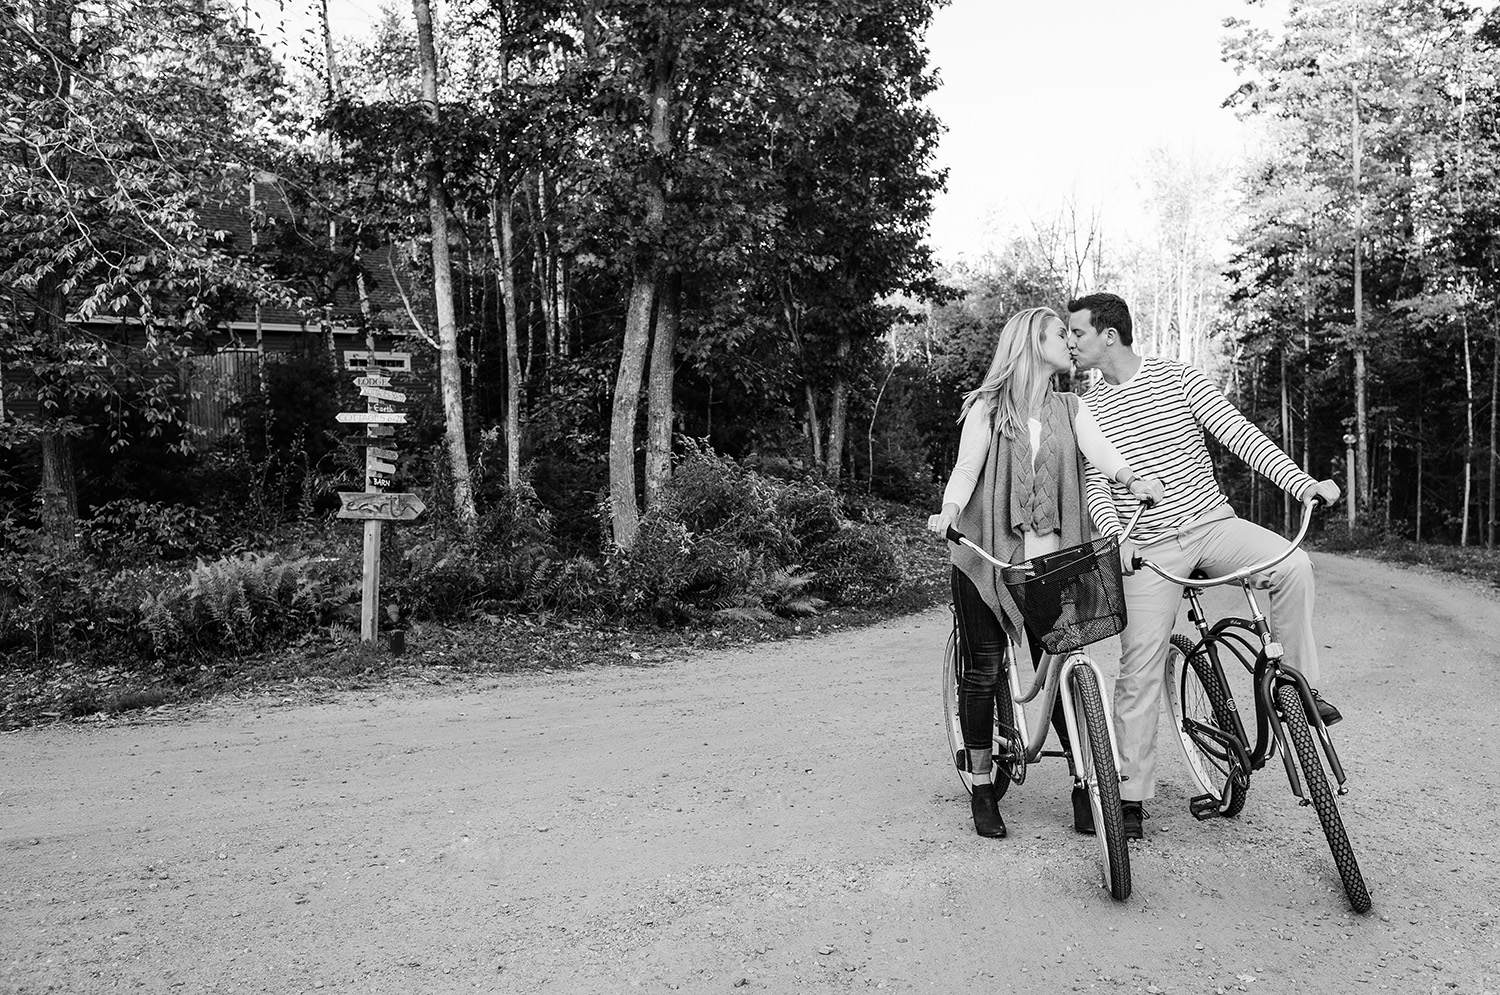 couple on bikes